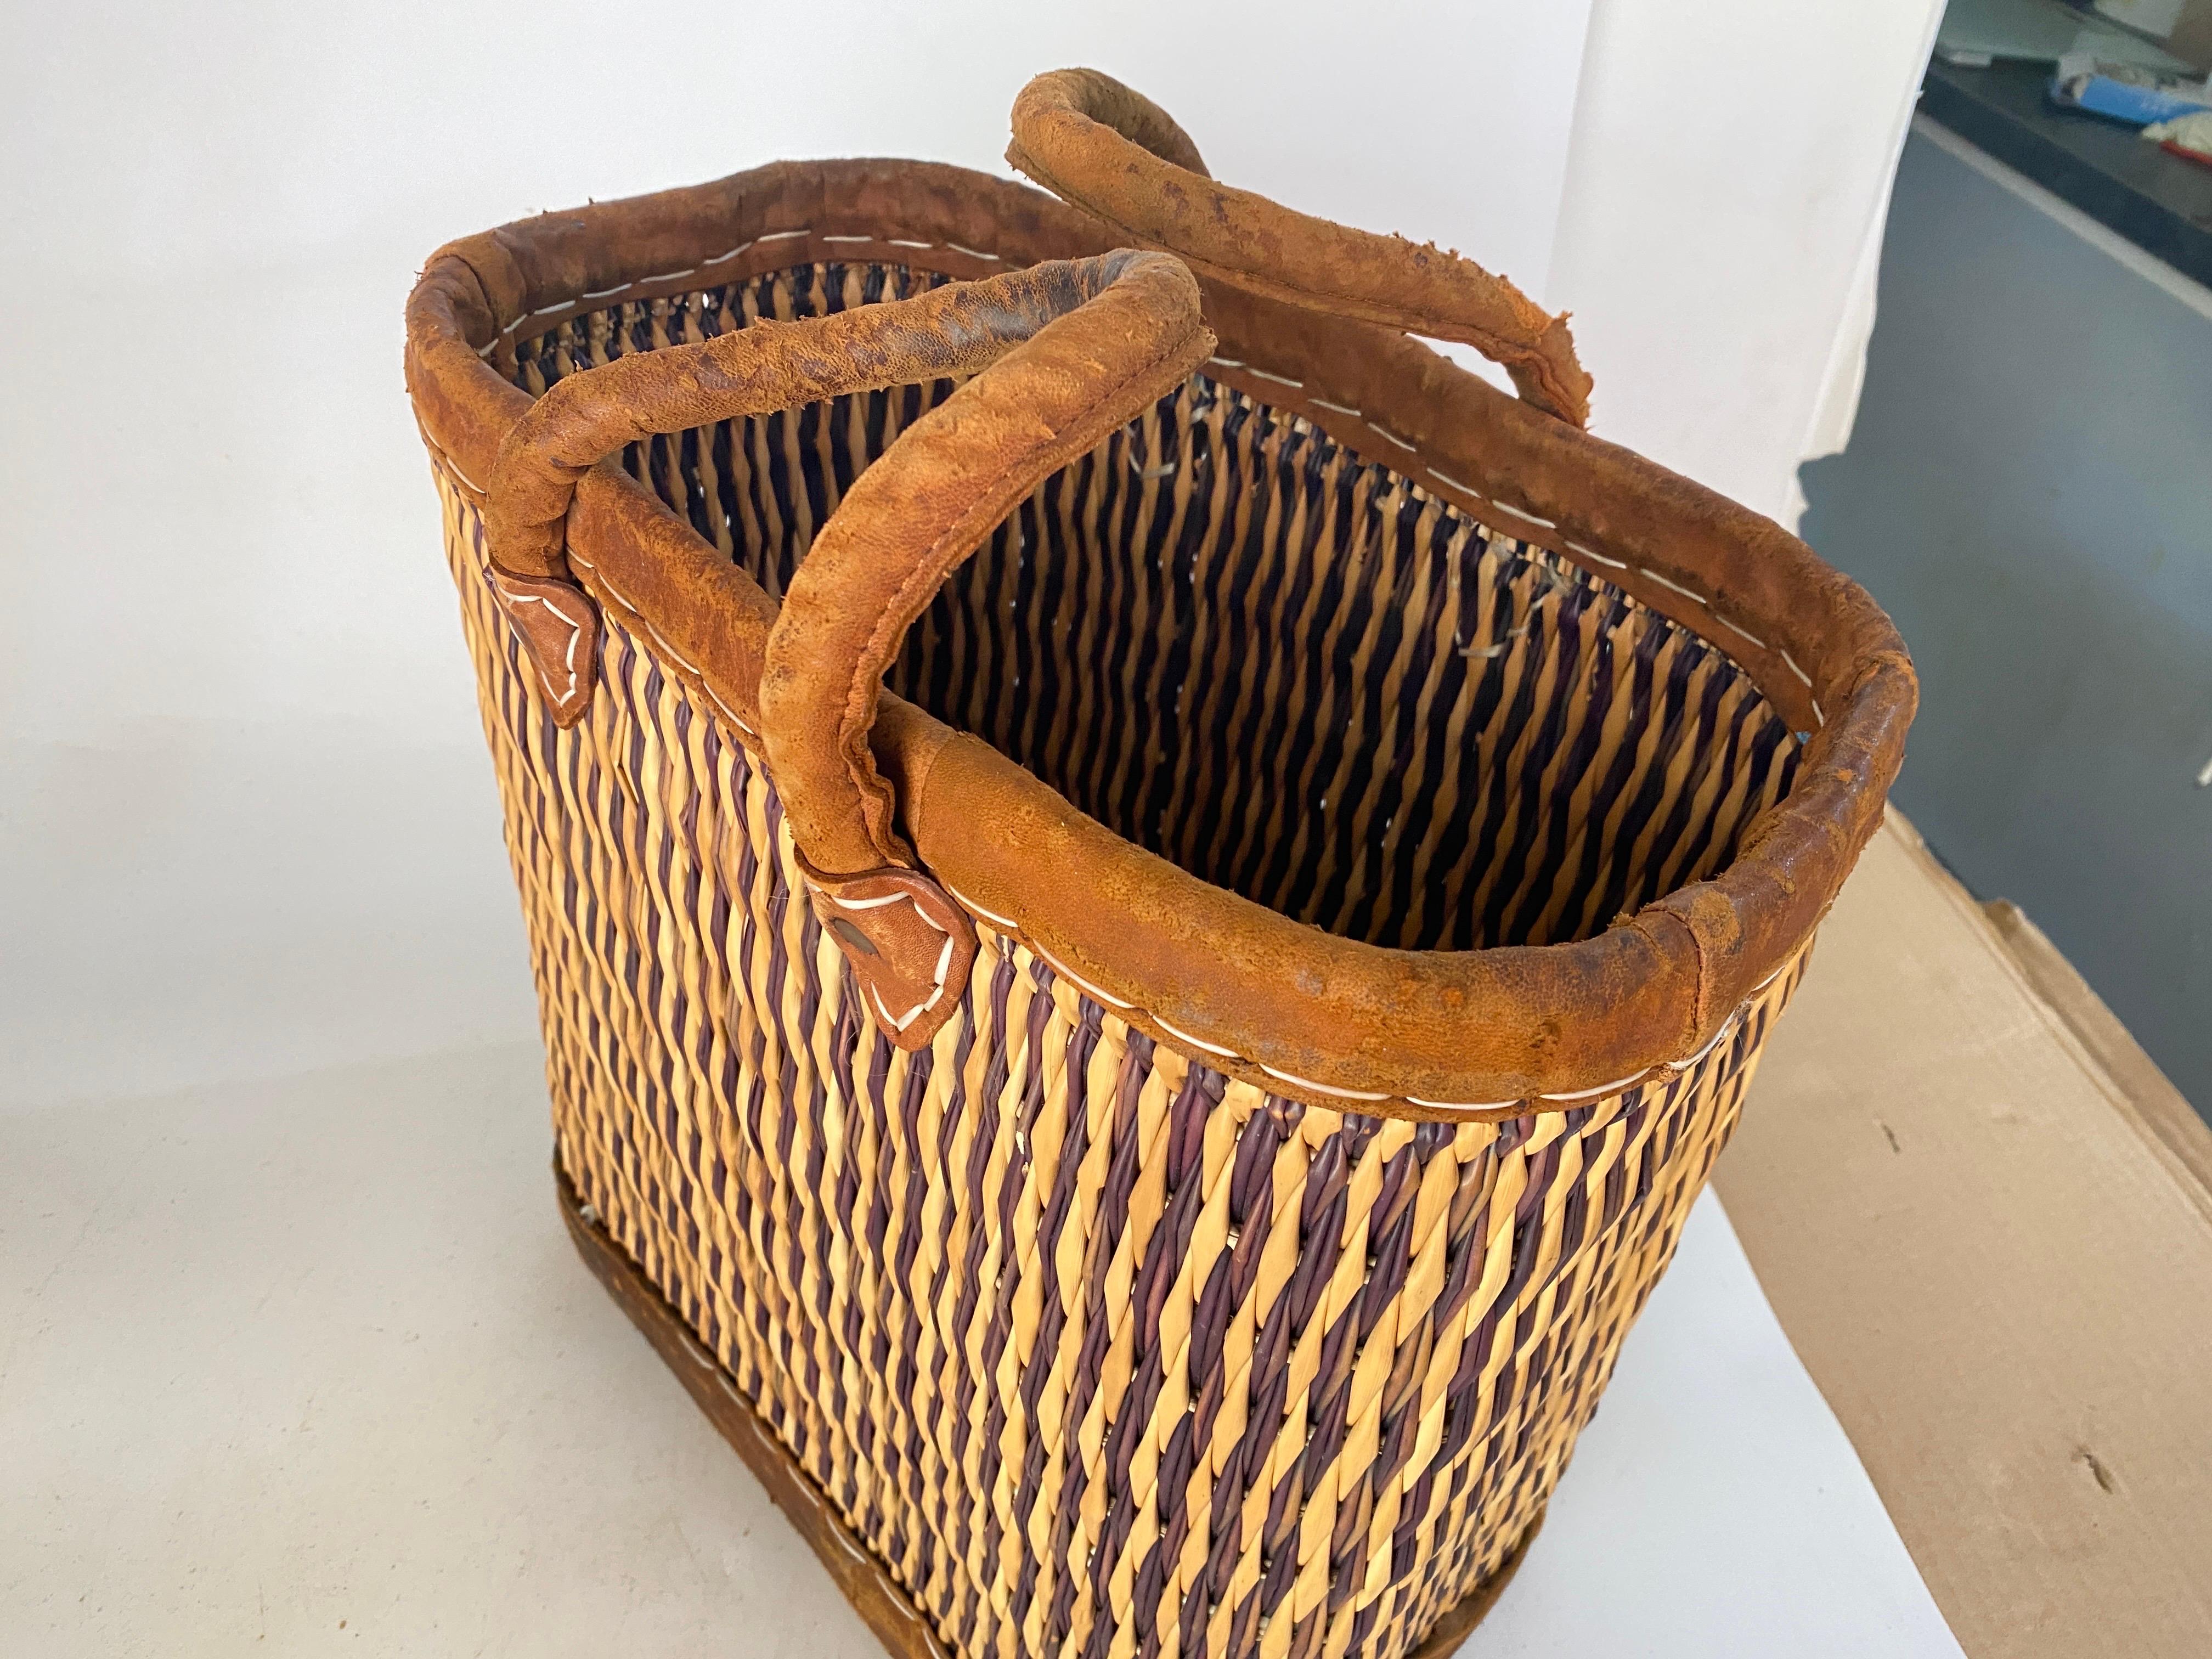 Vintage French Wicker Basket, Gold Color Stitched Leather Bag Handles France For Sale 7